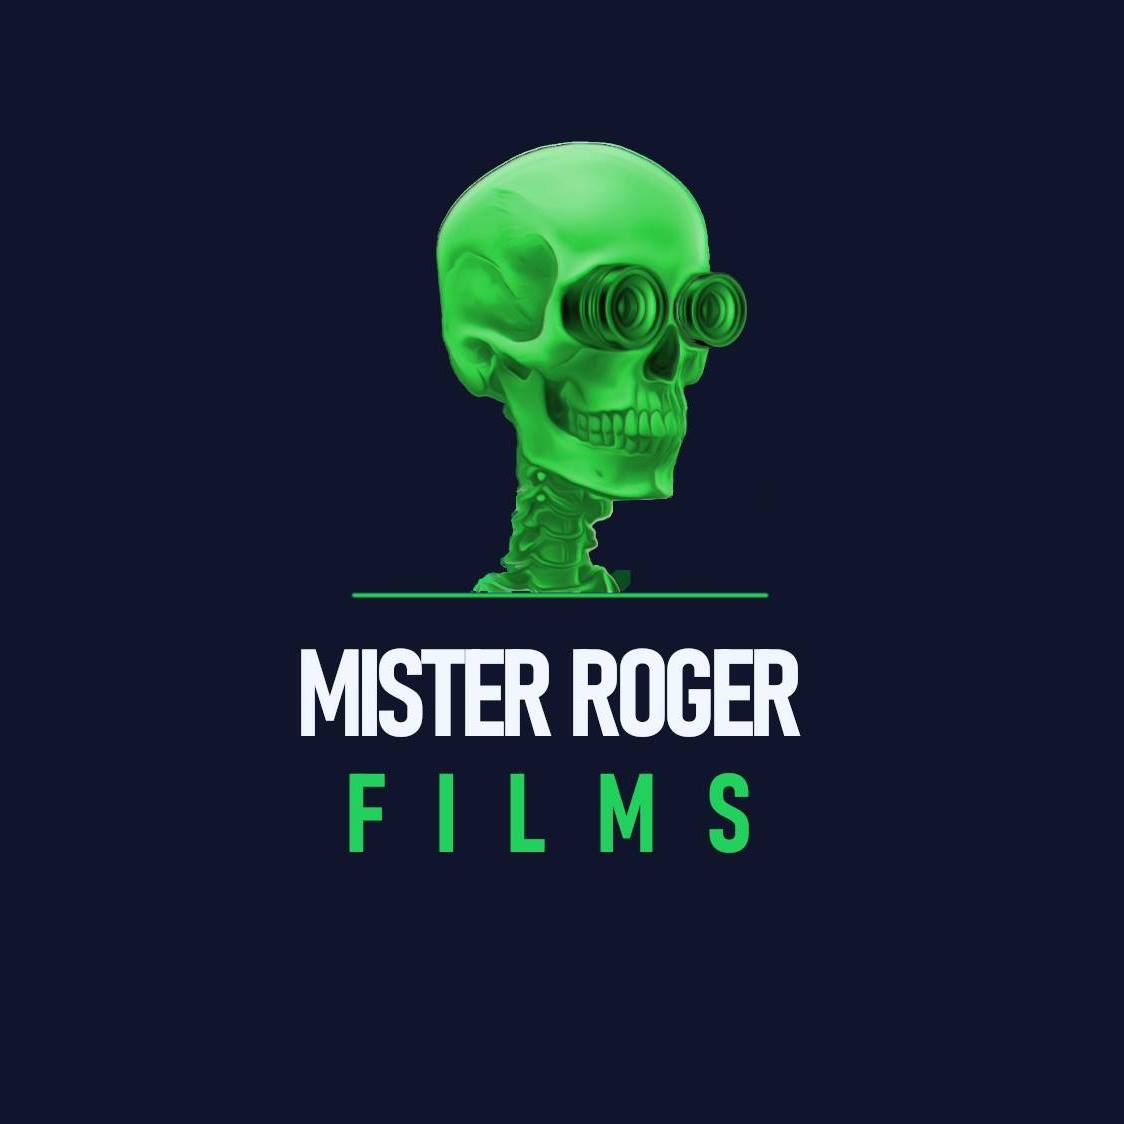 Mister Roger Films (MRF)